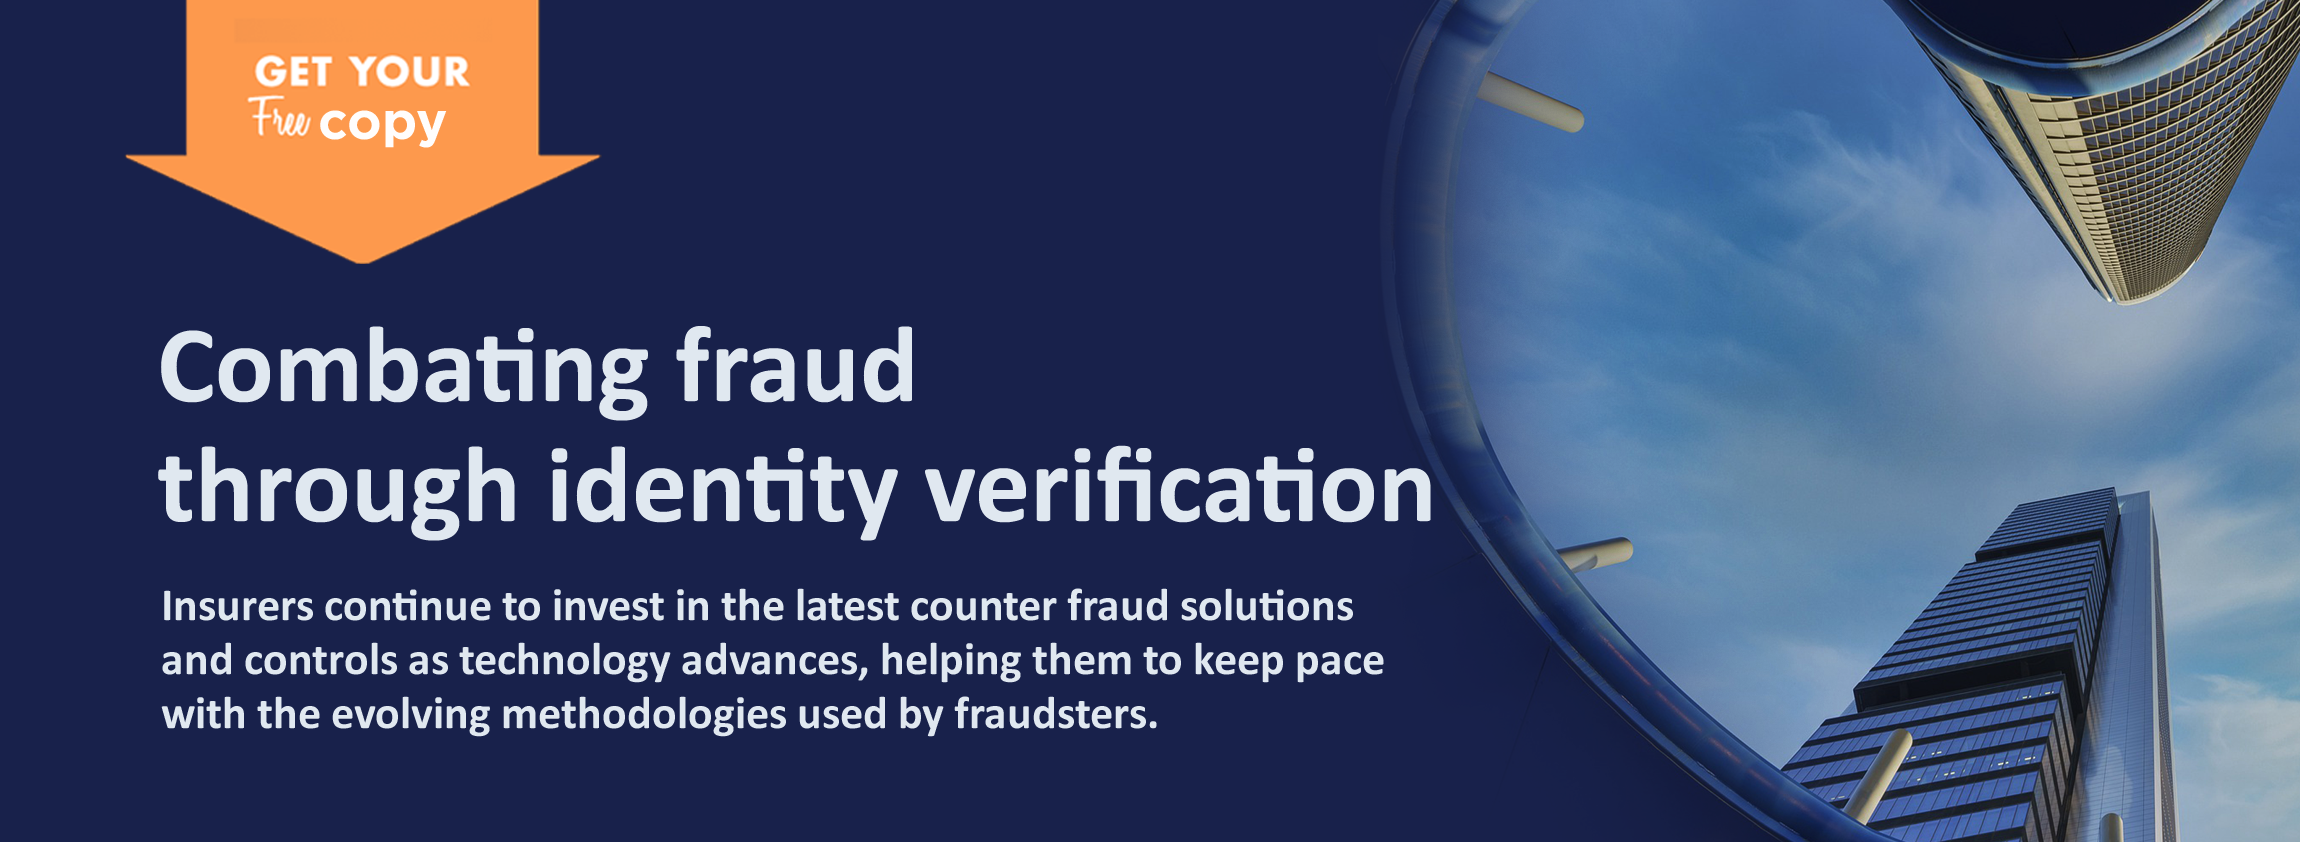 combating-fraud-identity-verification-landing